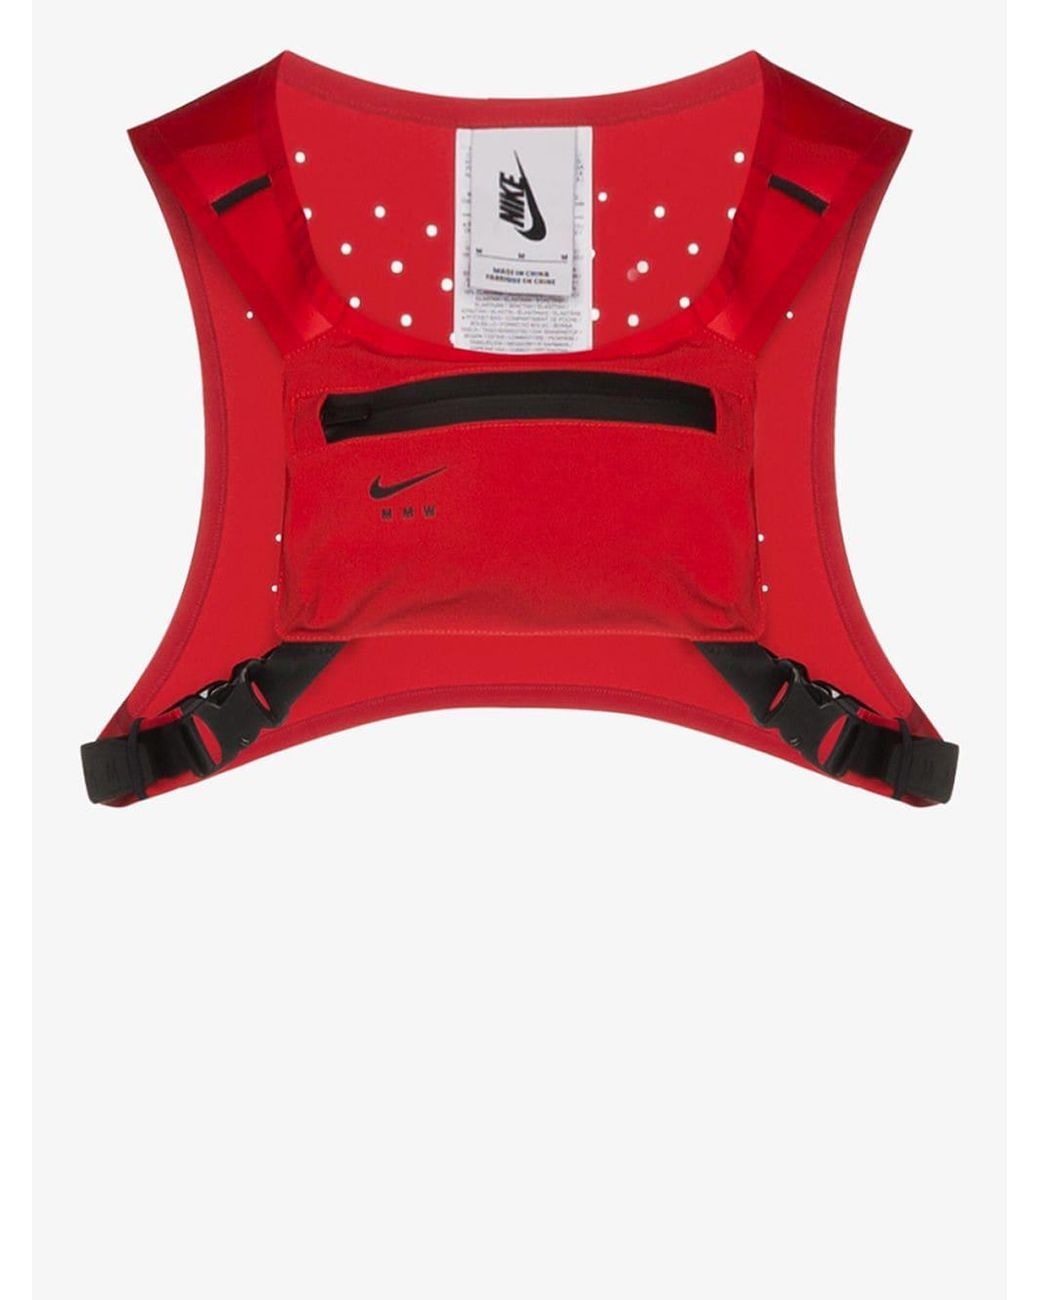 Nike x Matthew M Williams NRG Chest Rig Utility Bag Black CZ5629010 NEW  Genuine  eBay